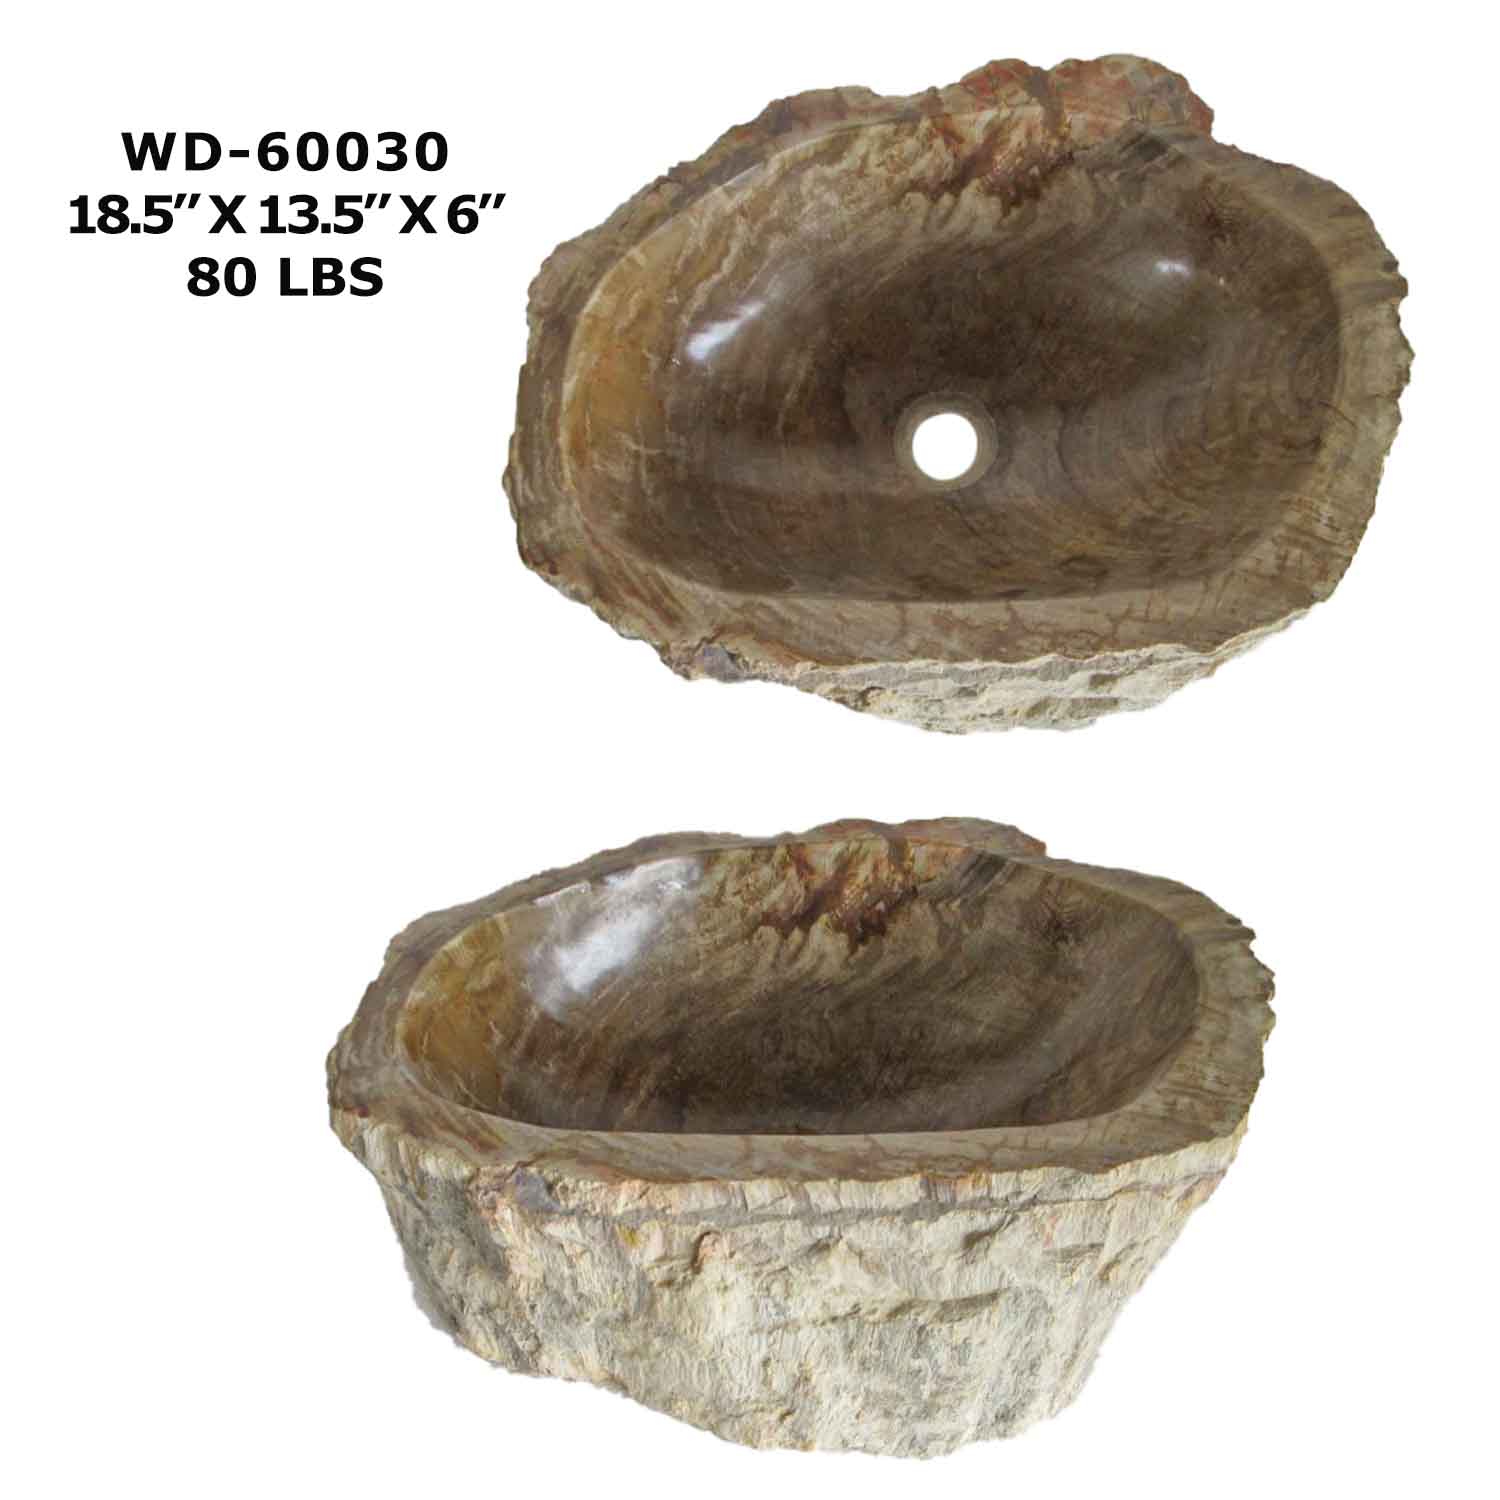 Petrified Wood Sink - Natural Stone Bathroom Vessel Sink - WD 60030